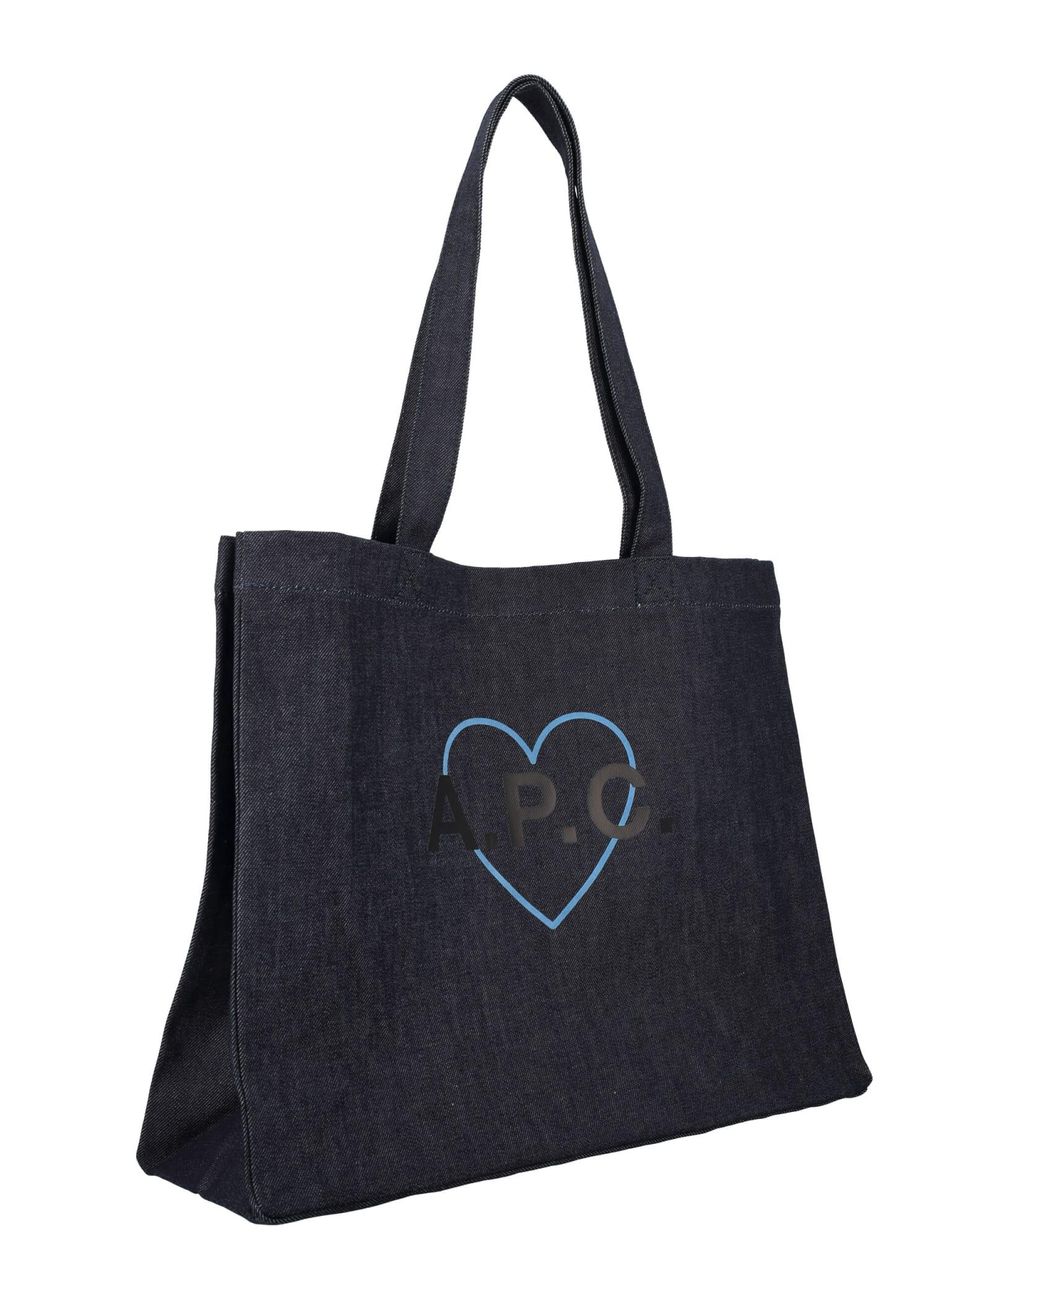 A.P.C. Saint Valentin Denim Shopping Bag in Indigo (Black) - Save 3% | Lyst